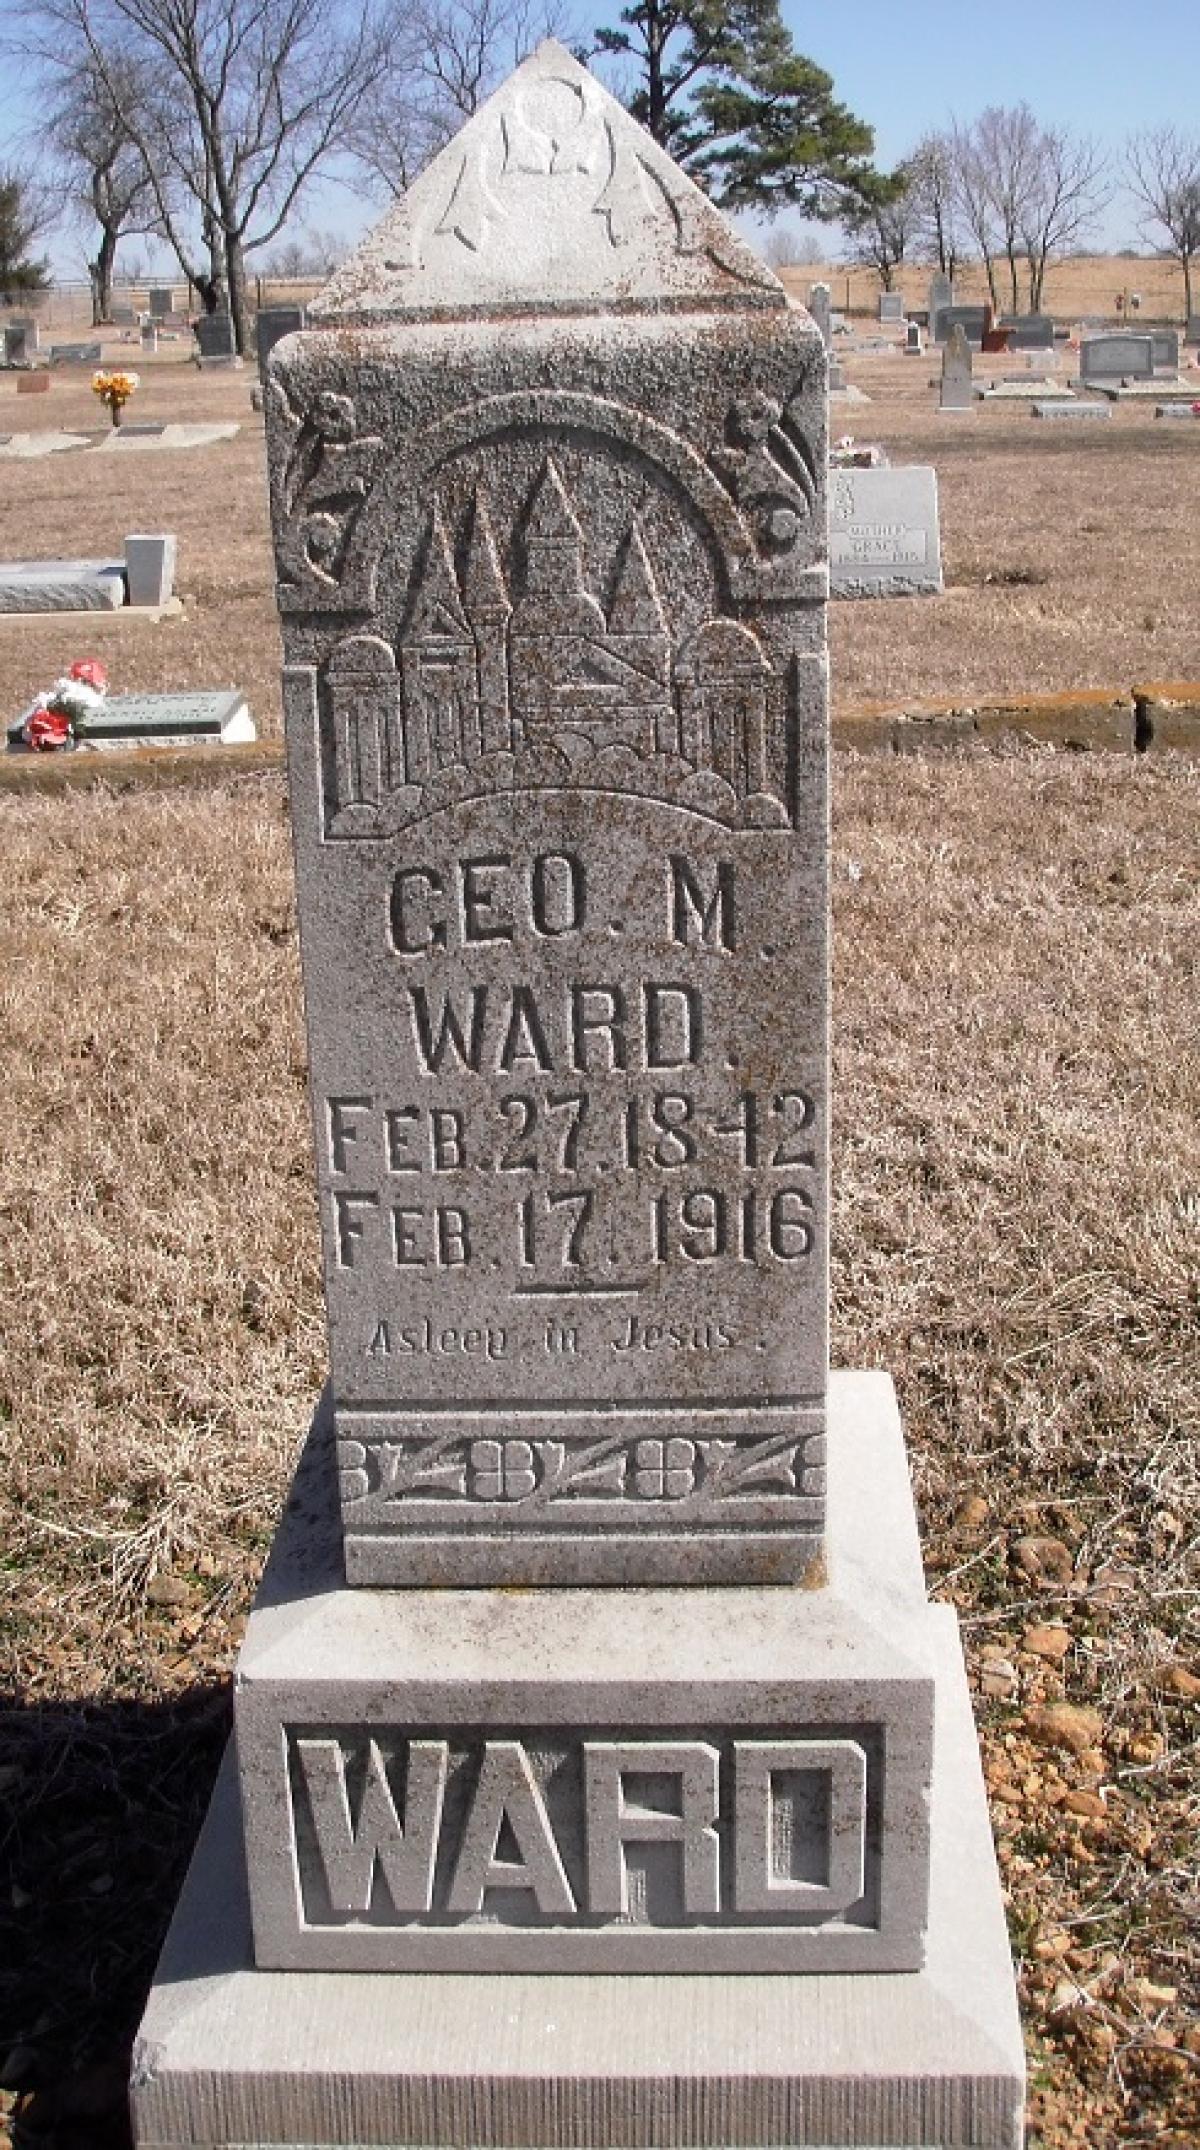 OK, Grove, Olympus Cemetery, Ward, Geo. M. Headstone